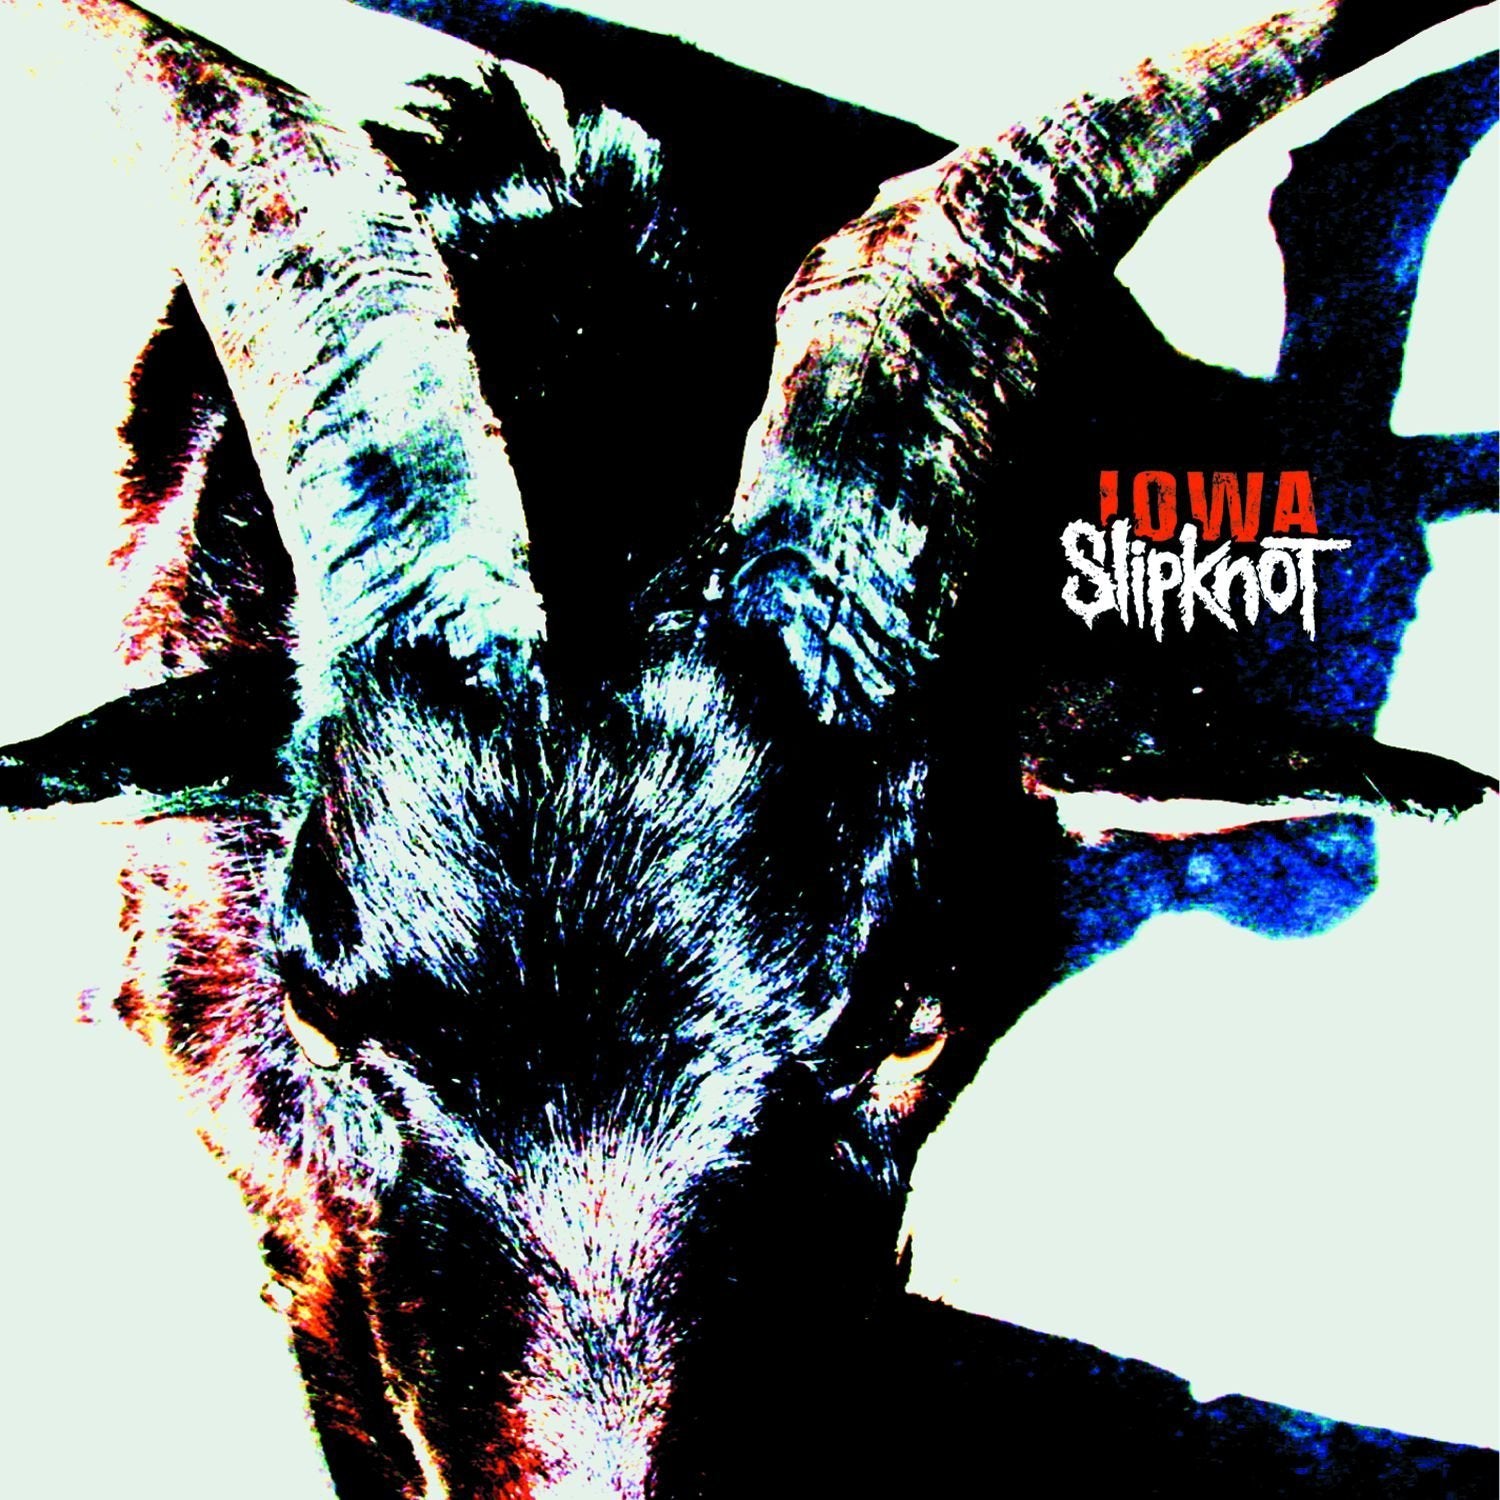 Slipknot "Iowa" [Translucent Green Vinyl] 2LP